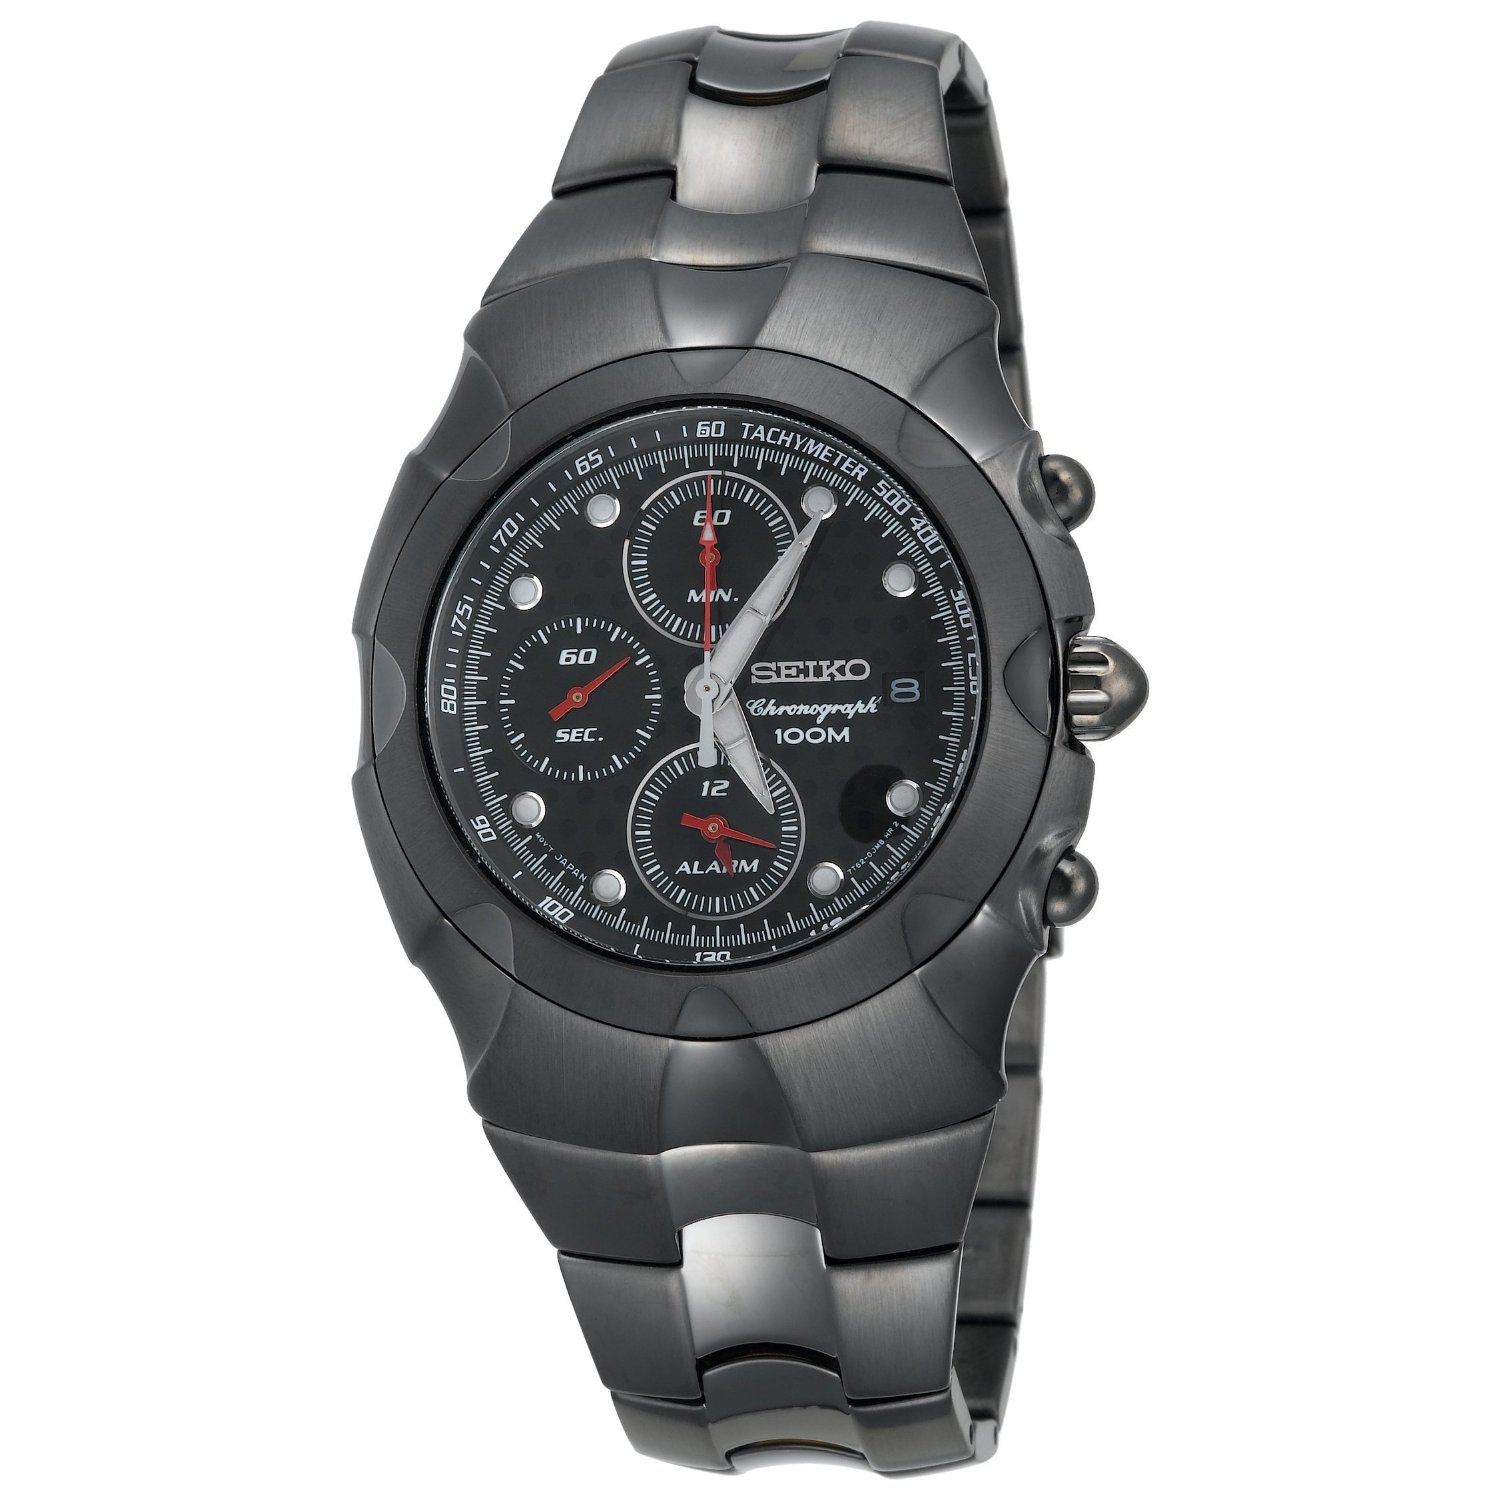 Seiko Men's SNA765 Chronograph Black Ion Watch